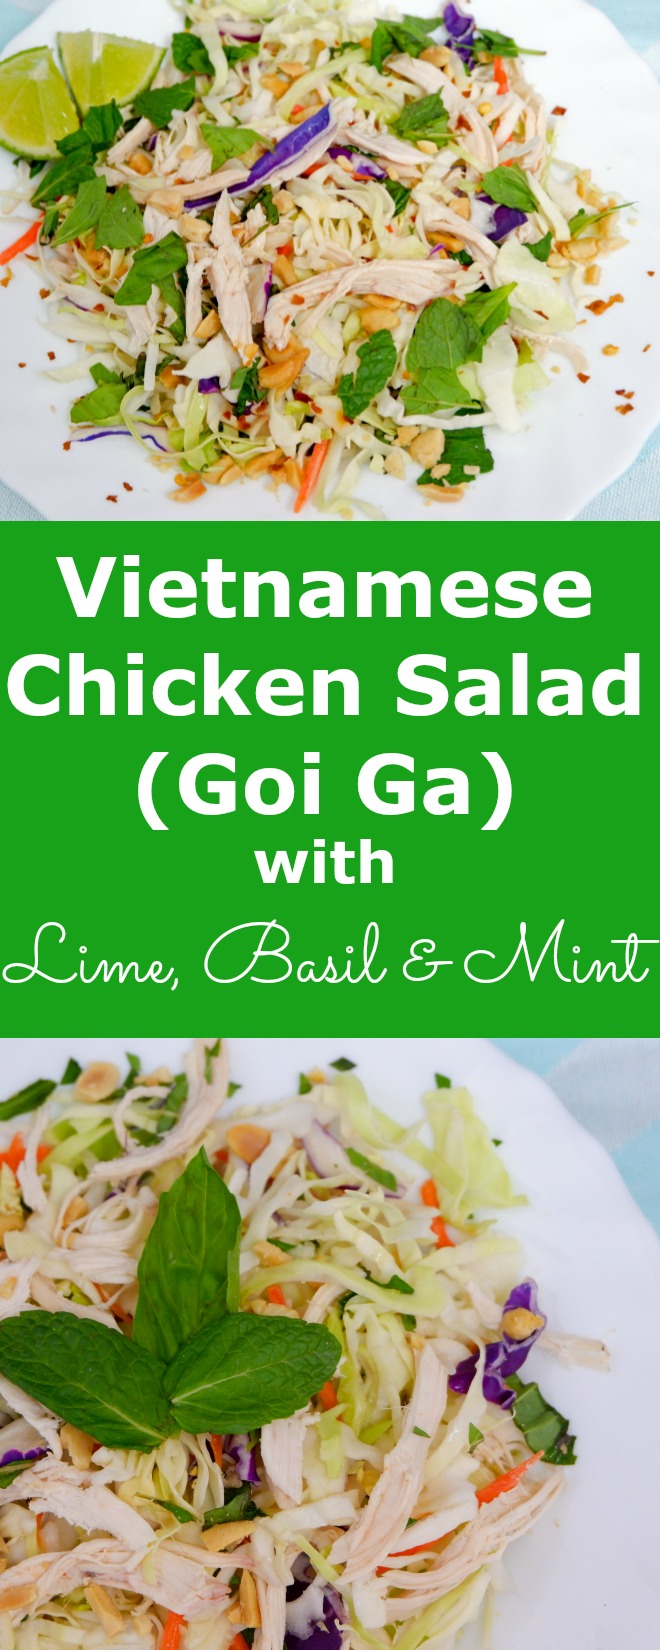 vietnamese chicken salad goi ga green